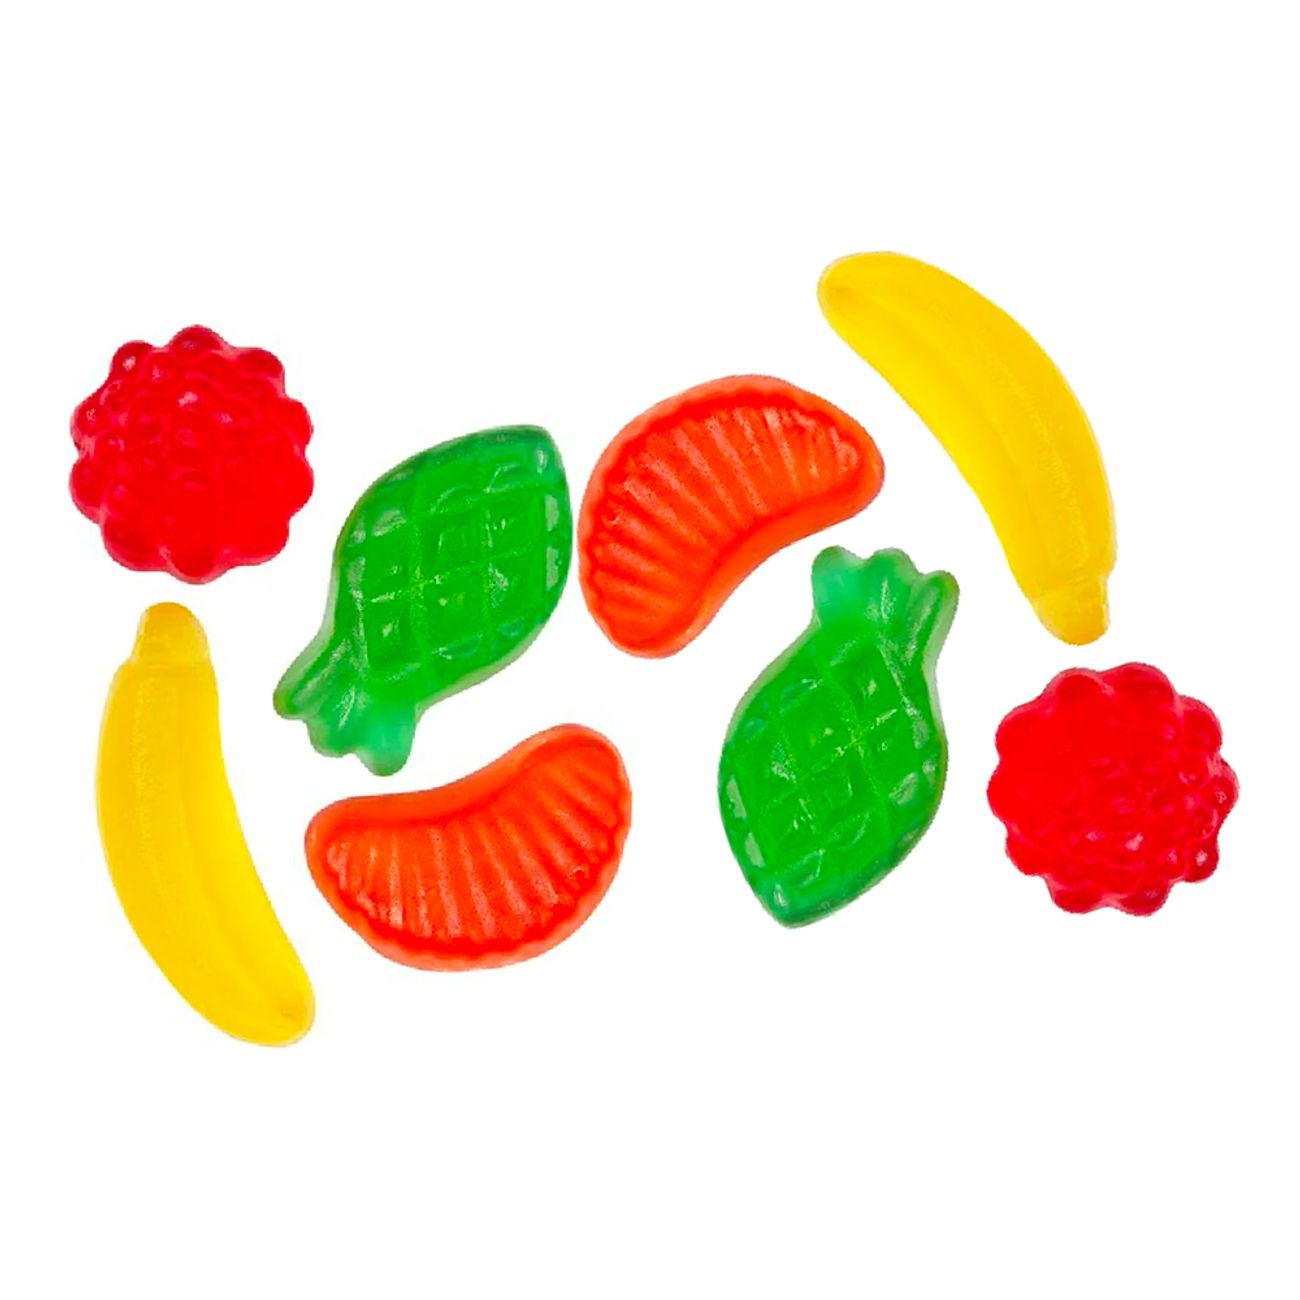 sockerfria-tropiska-frukter-storpack-79325-1